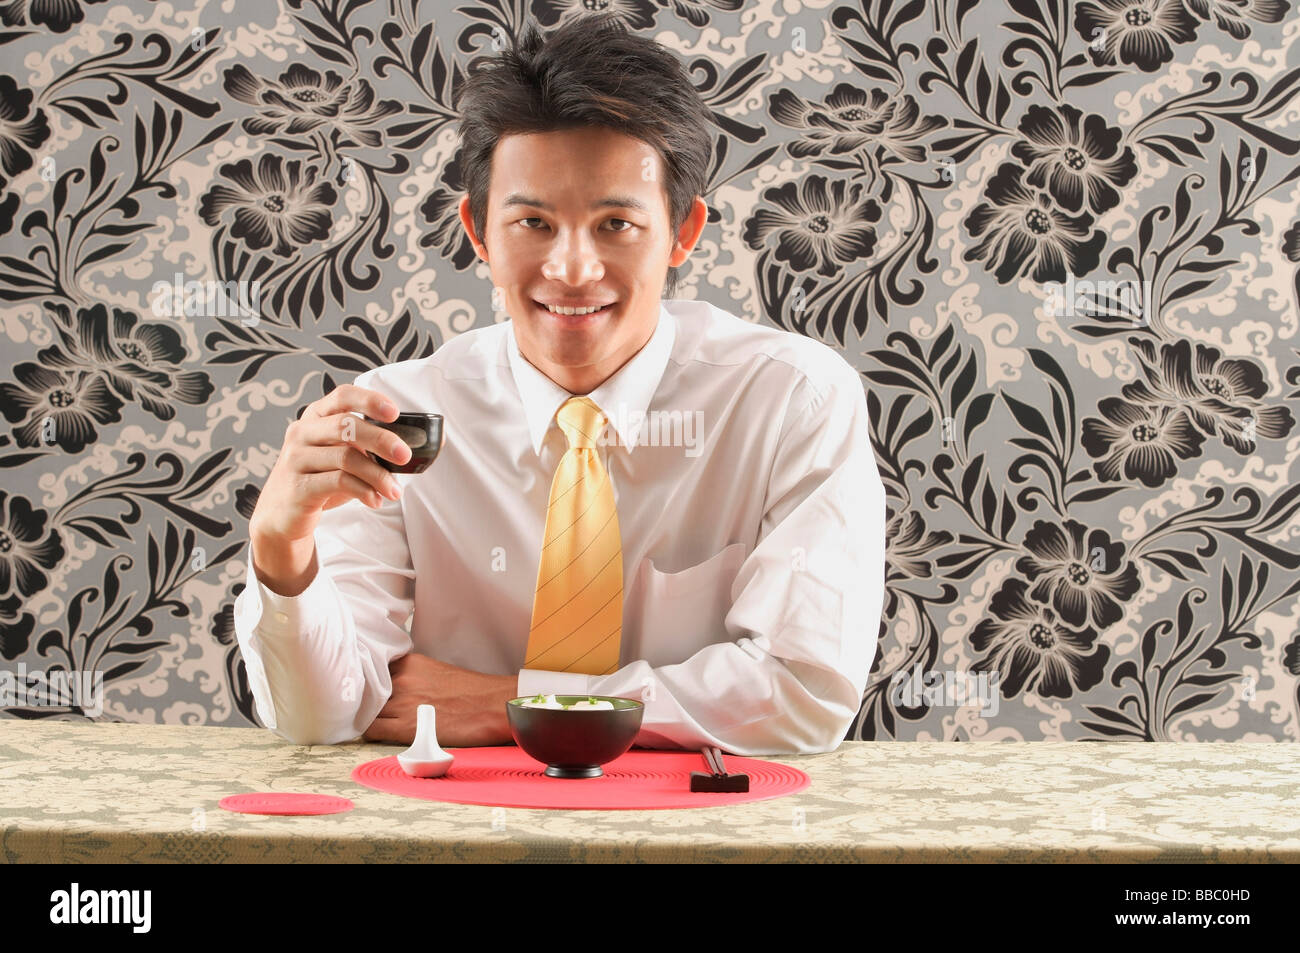 Man having meal at restaurant Stock Photo